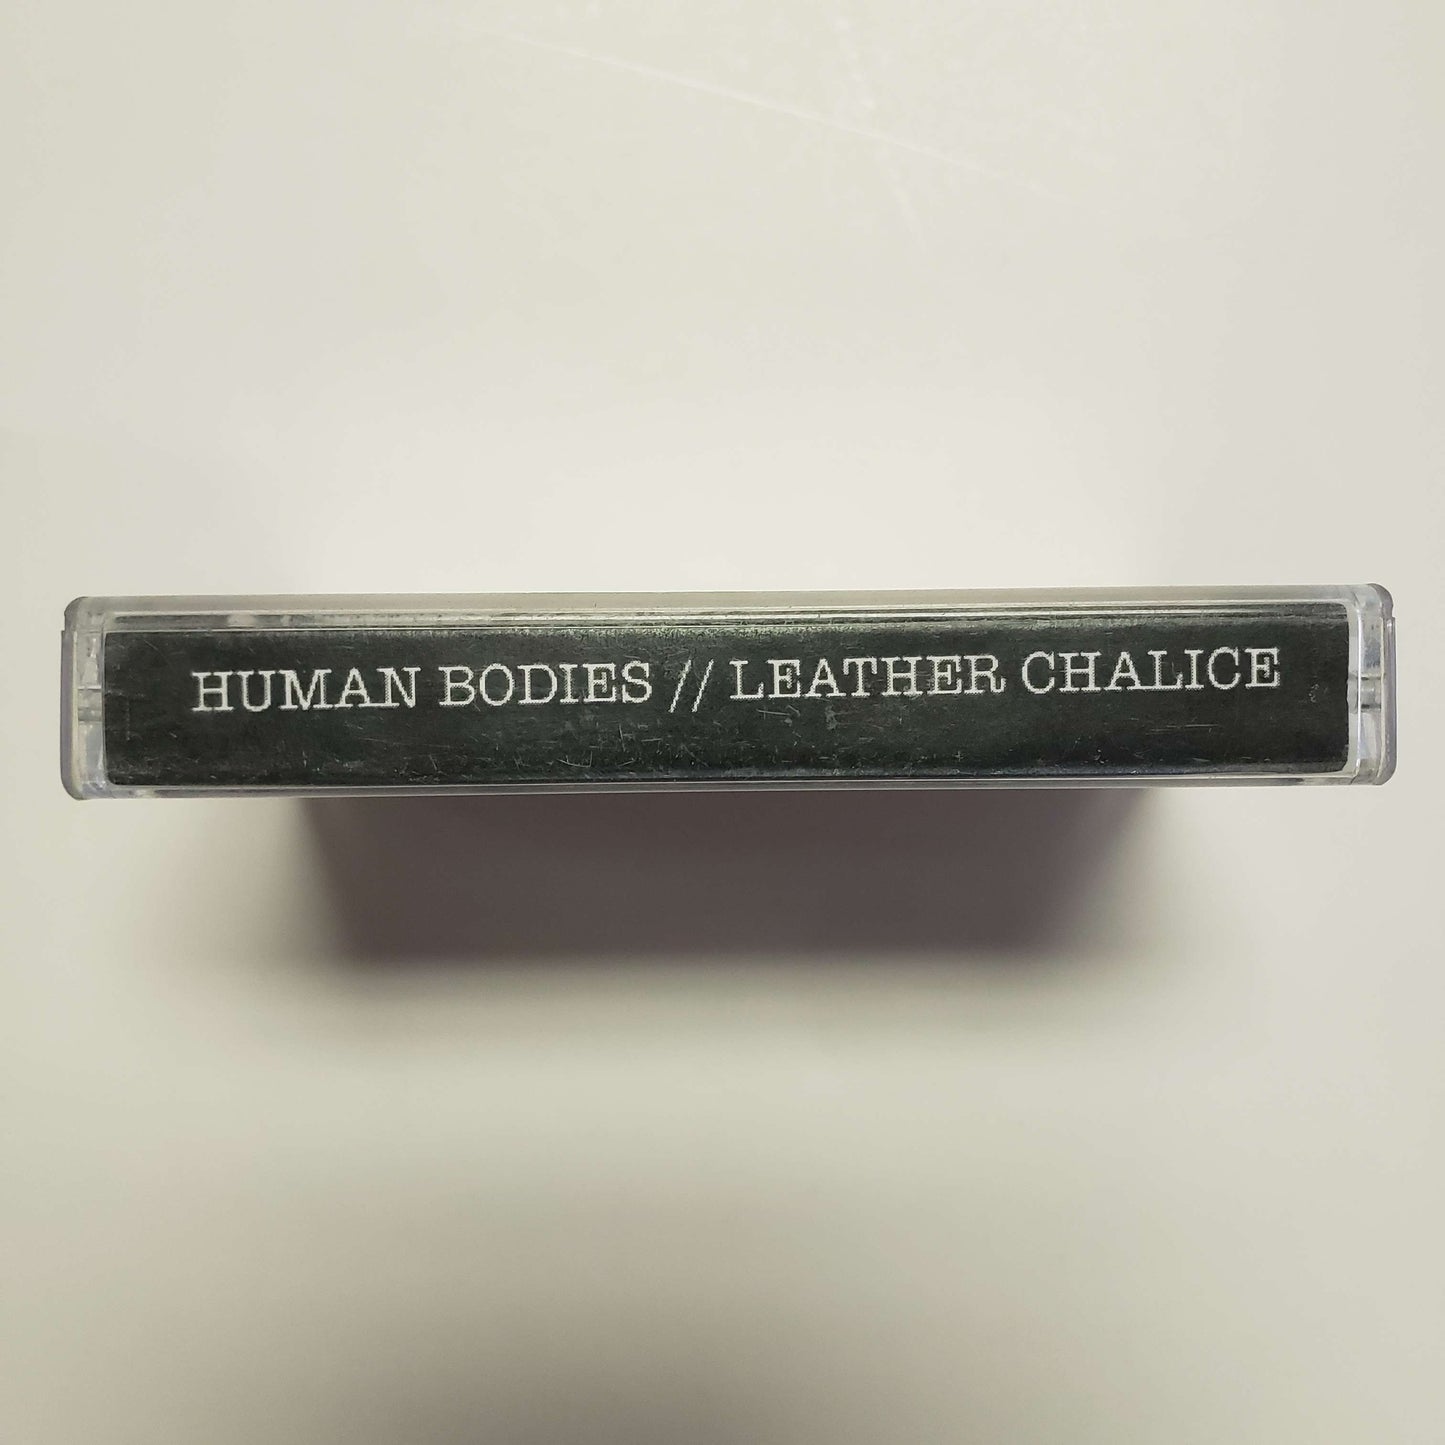 Human Bodies / Leather Chalice - Split original cassette tape